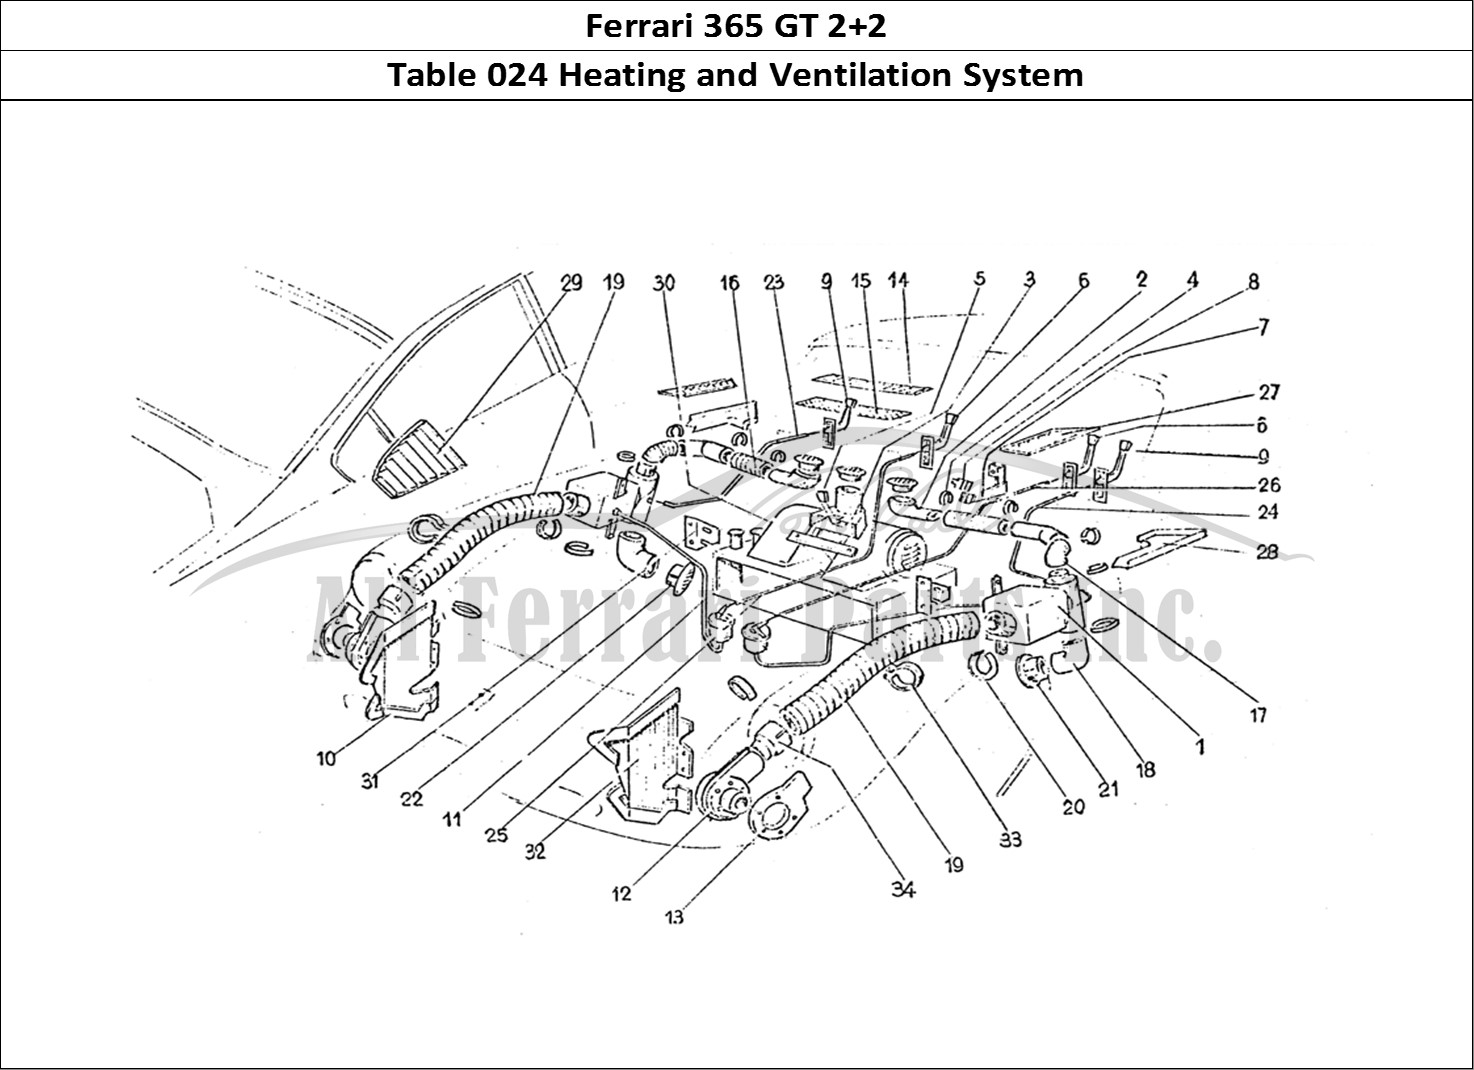 Ferrari Parts Ferrari 365 GT 2+2 (Coachwork) Page 024 Heater matrix & Ventilati